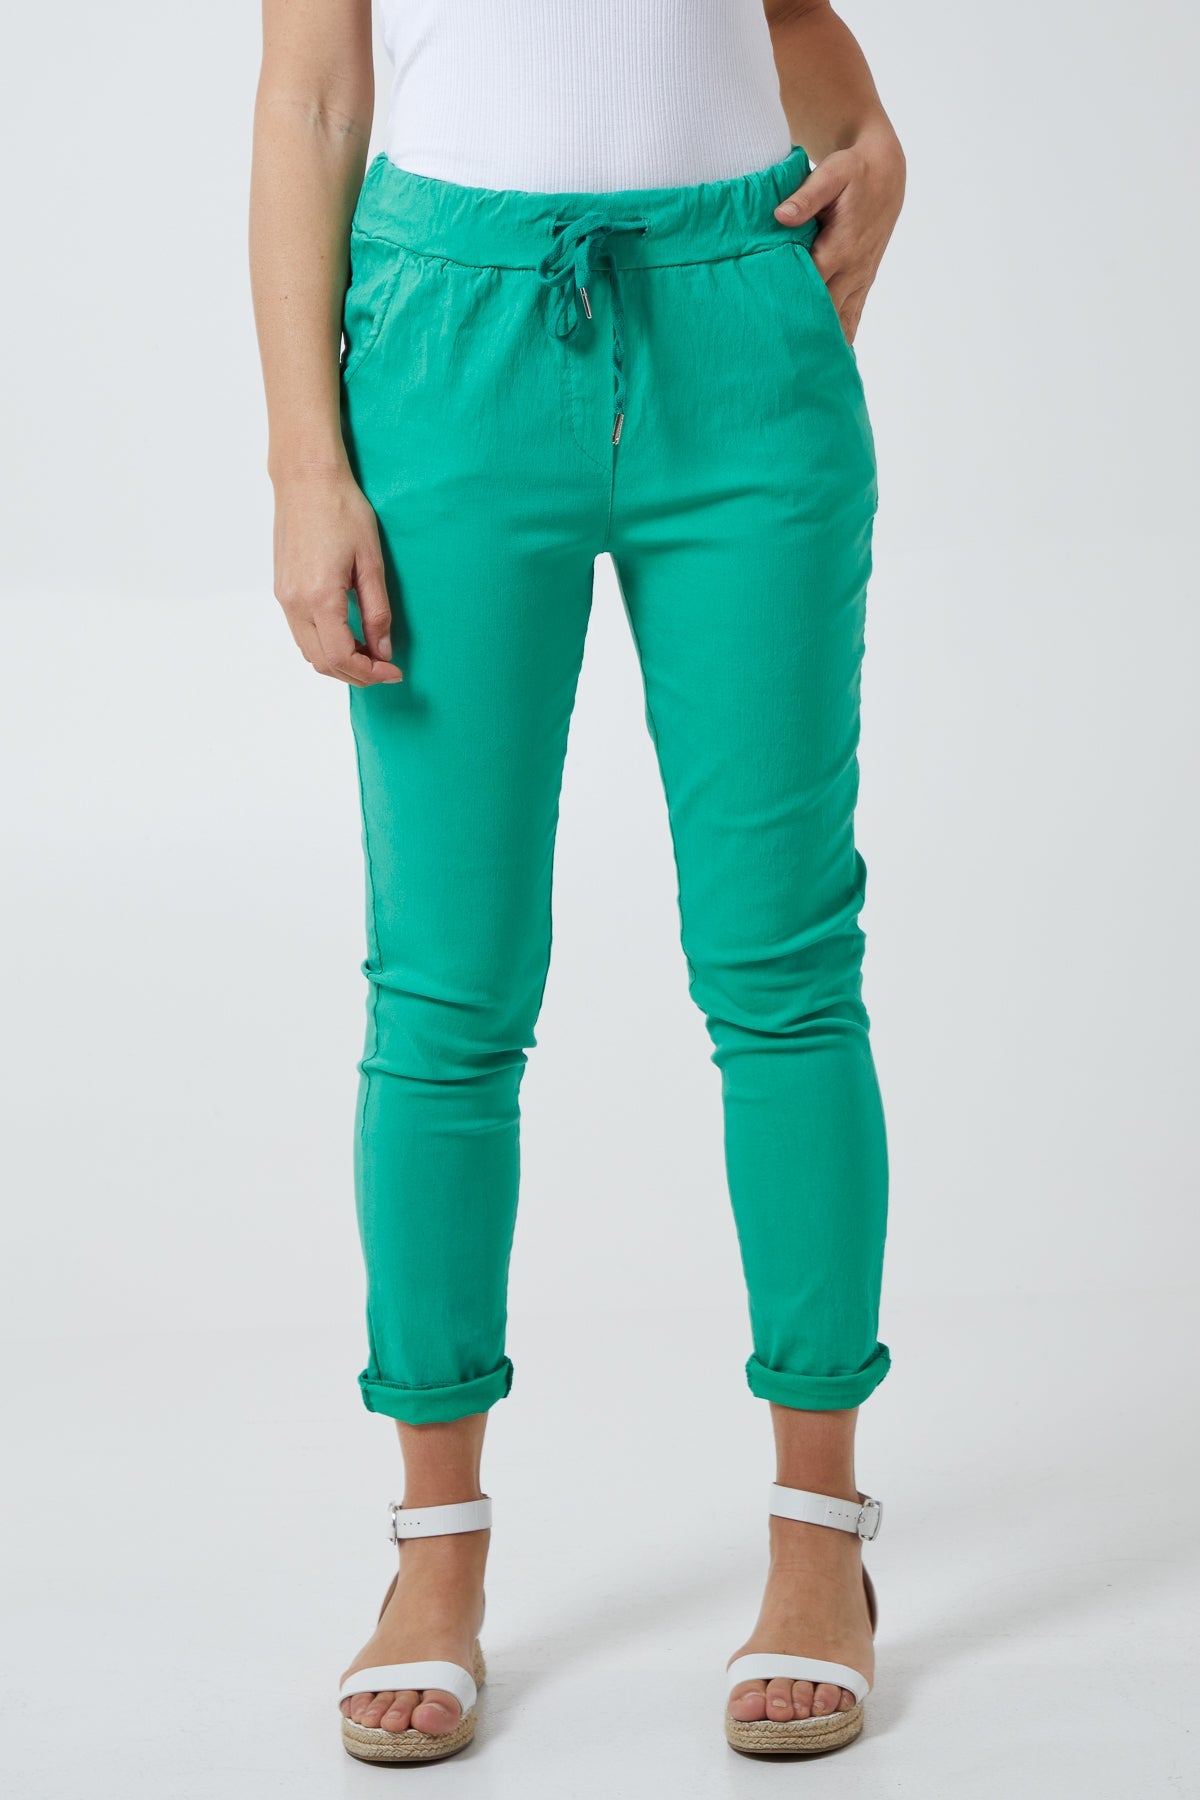 Fizz Plus Size Plain Magic Pants - Green